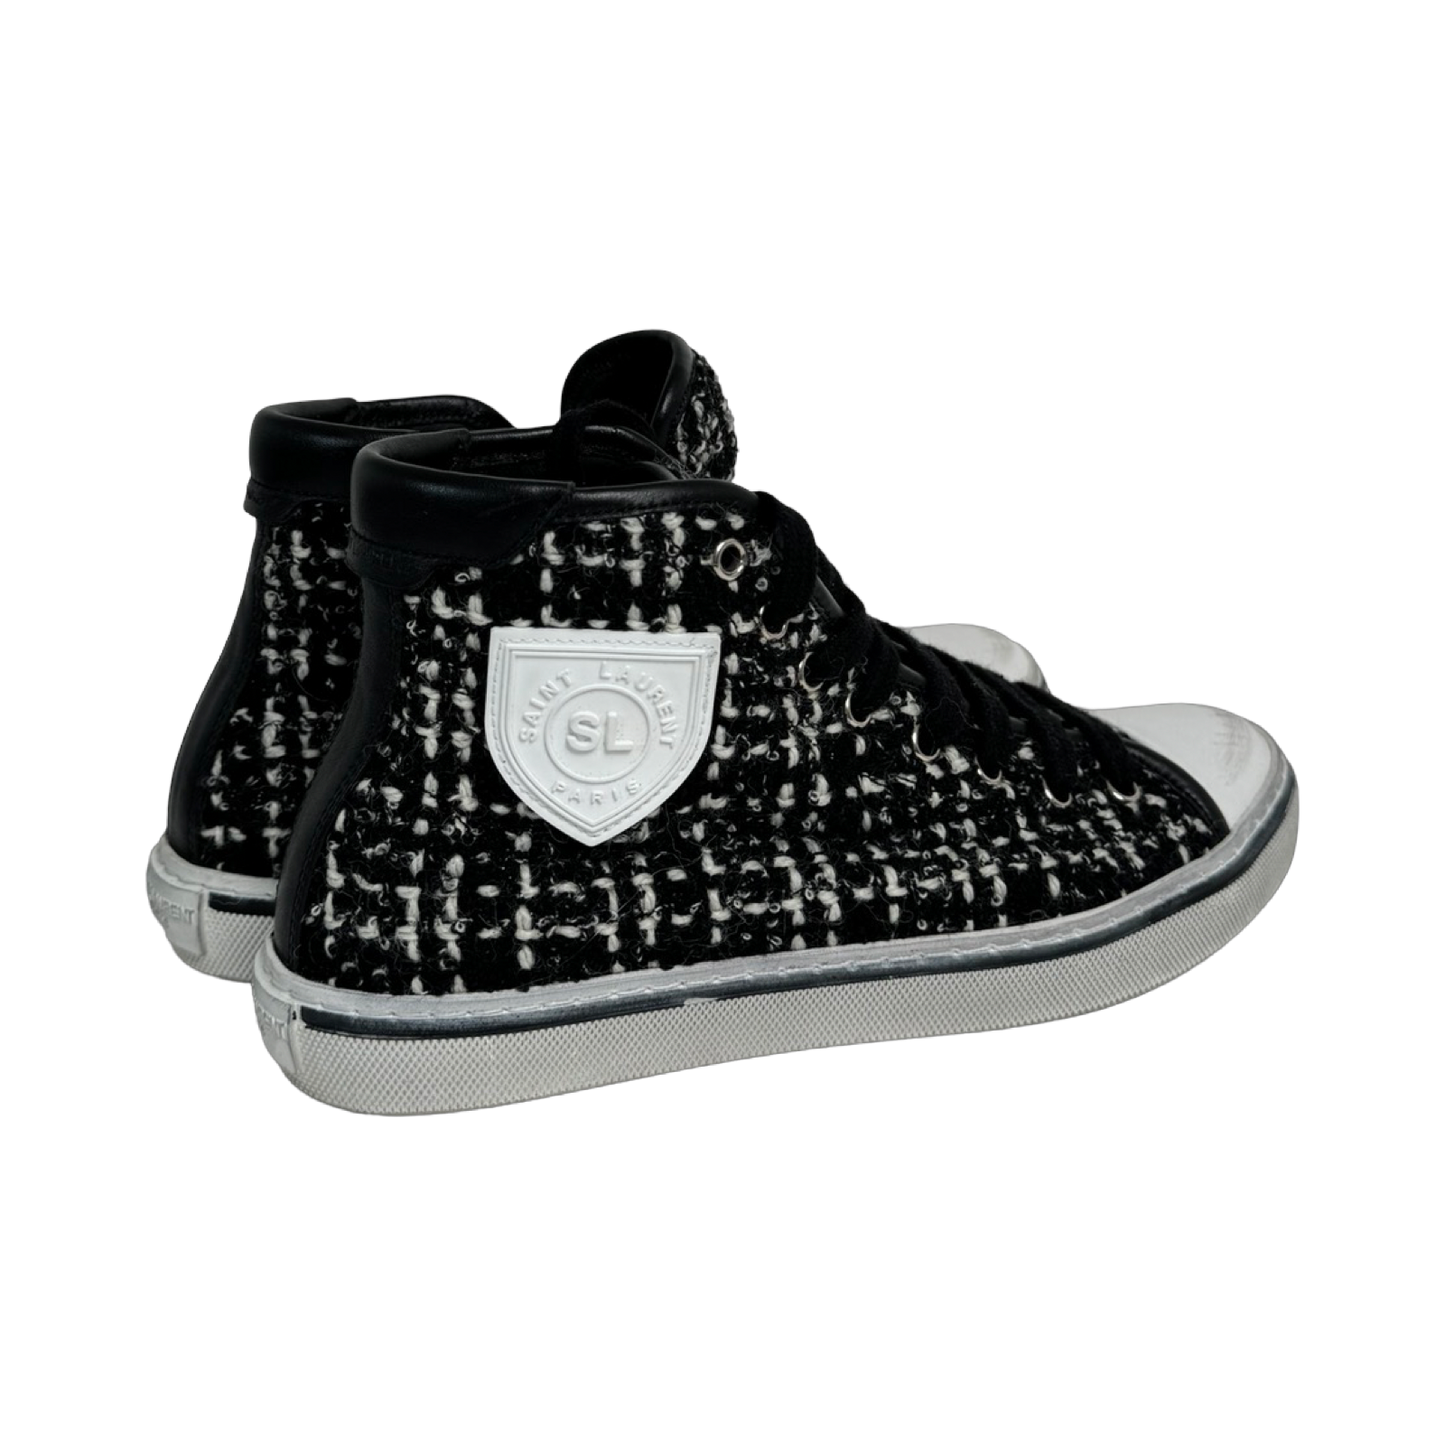 Saint Laurent Malibu Tweed Mid Top Sneakers (Size 37)